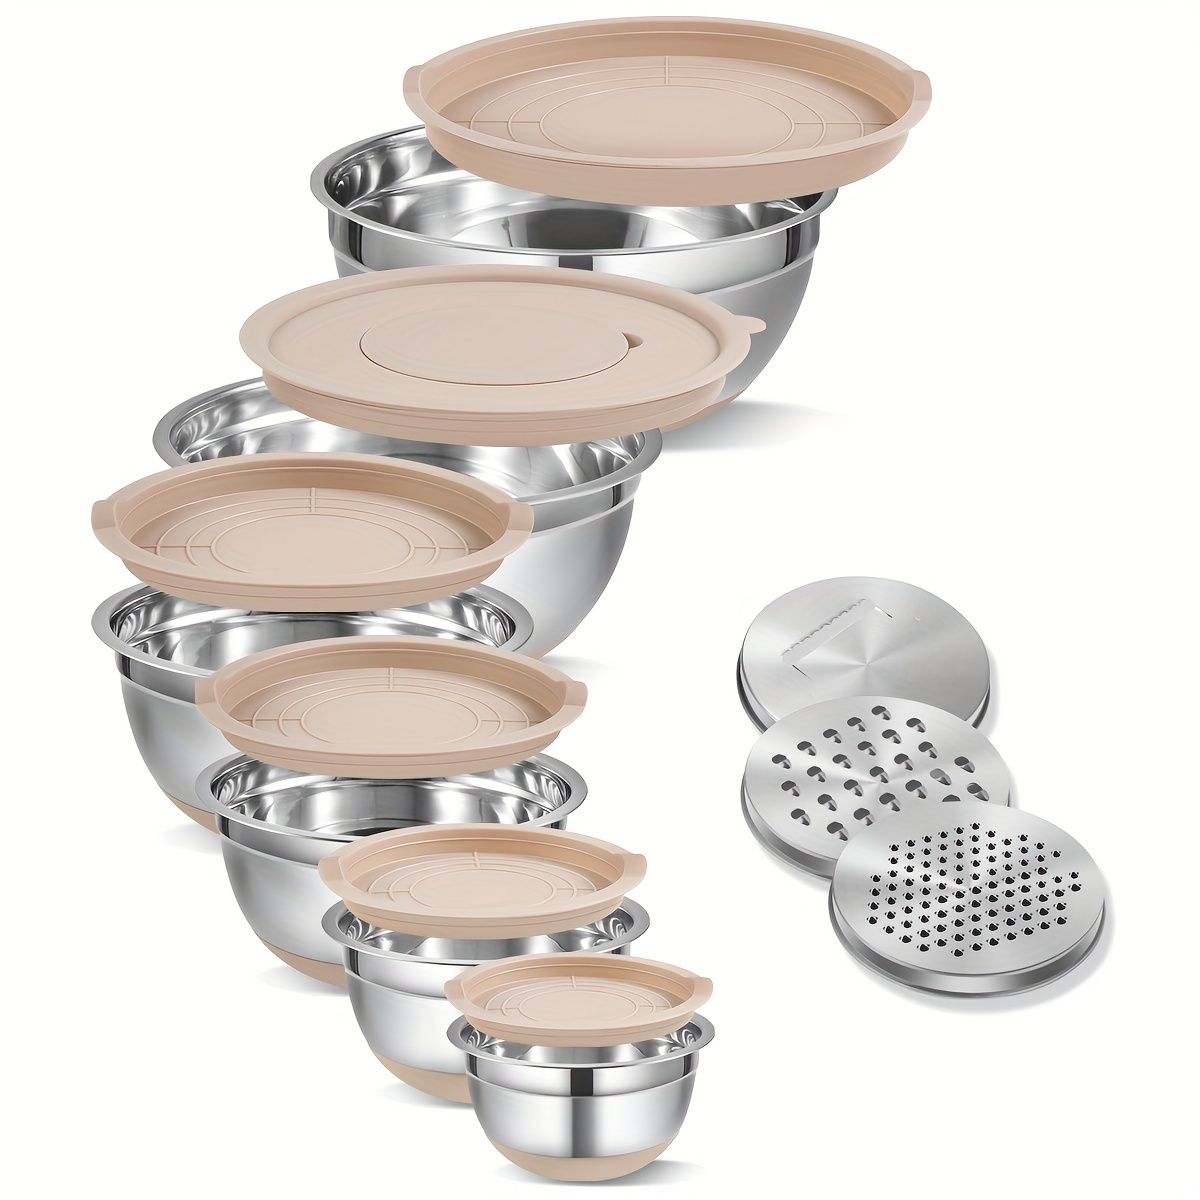 

Set, 6pcs Mixing Bowls With Lids And 3pcs Grater Attachments, Stainless Steel Salad Mixing Bowl Set, 0.95l+1.4l+1.9l+2.4l+3.2l+6.5l, Baking Tools, Home Kitchen Accessories (khaki)